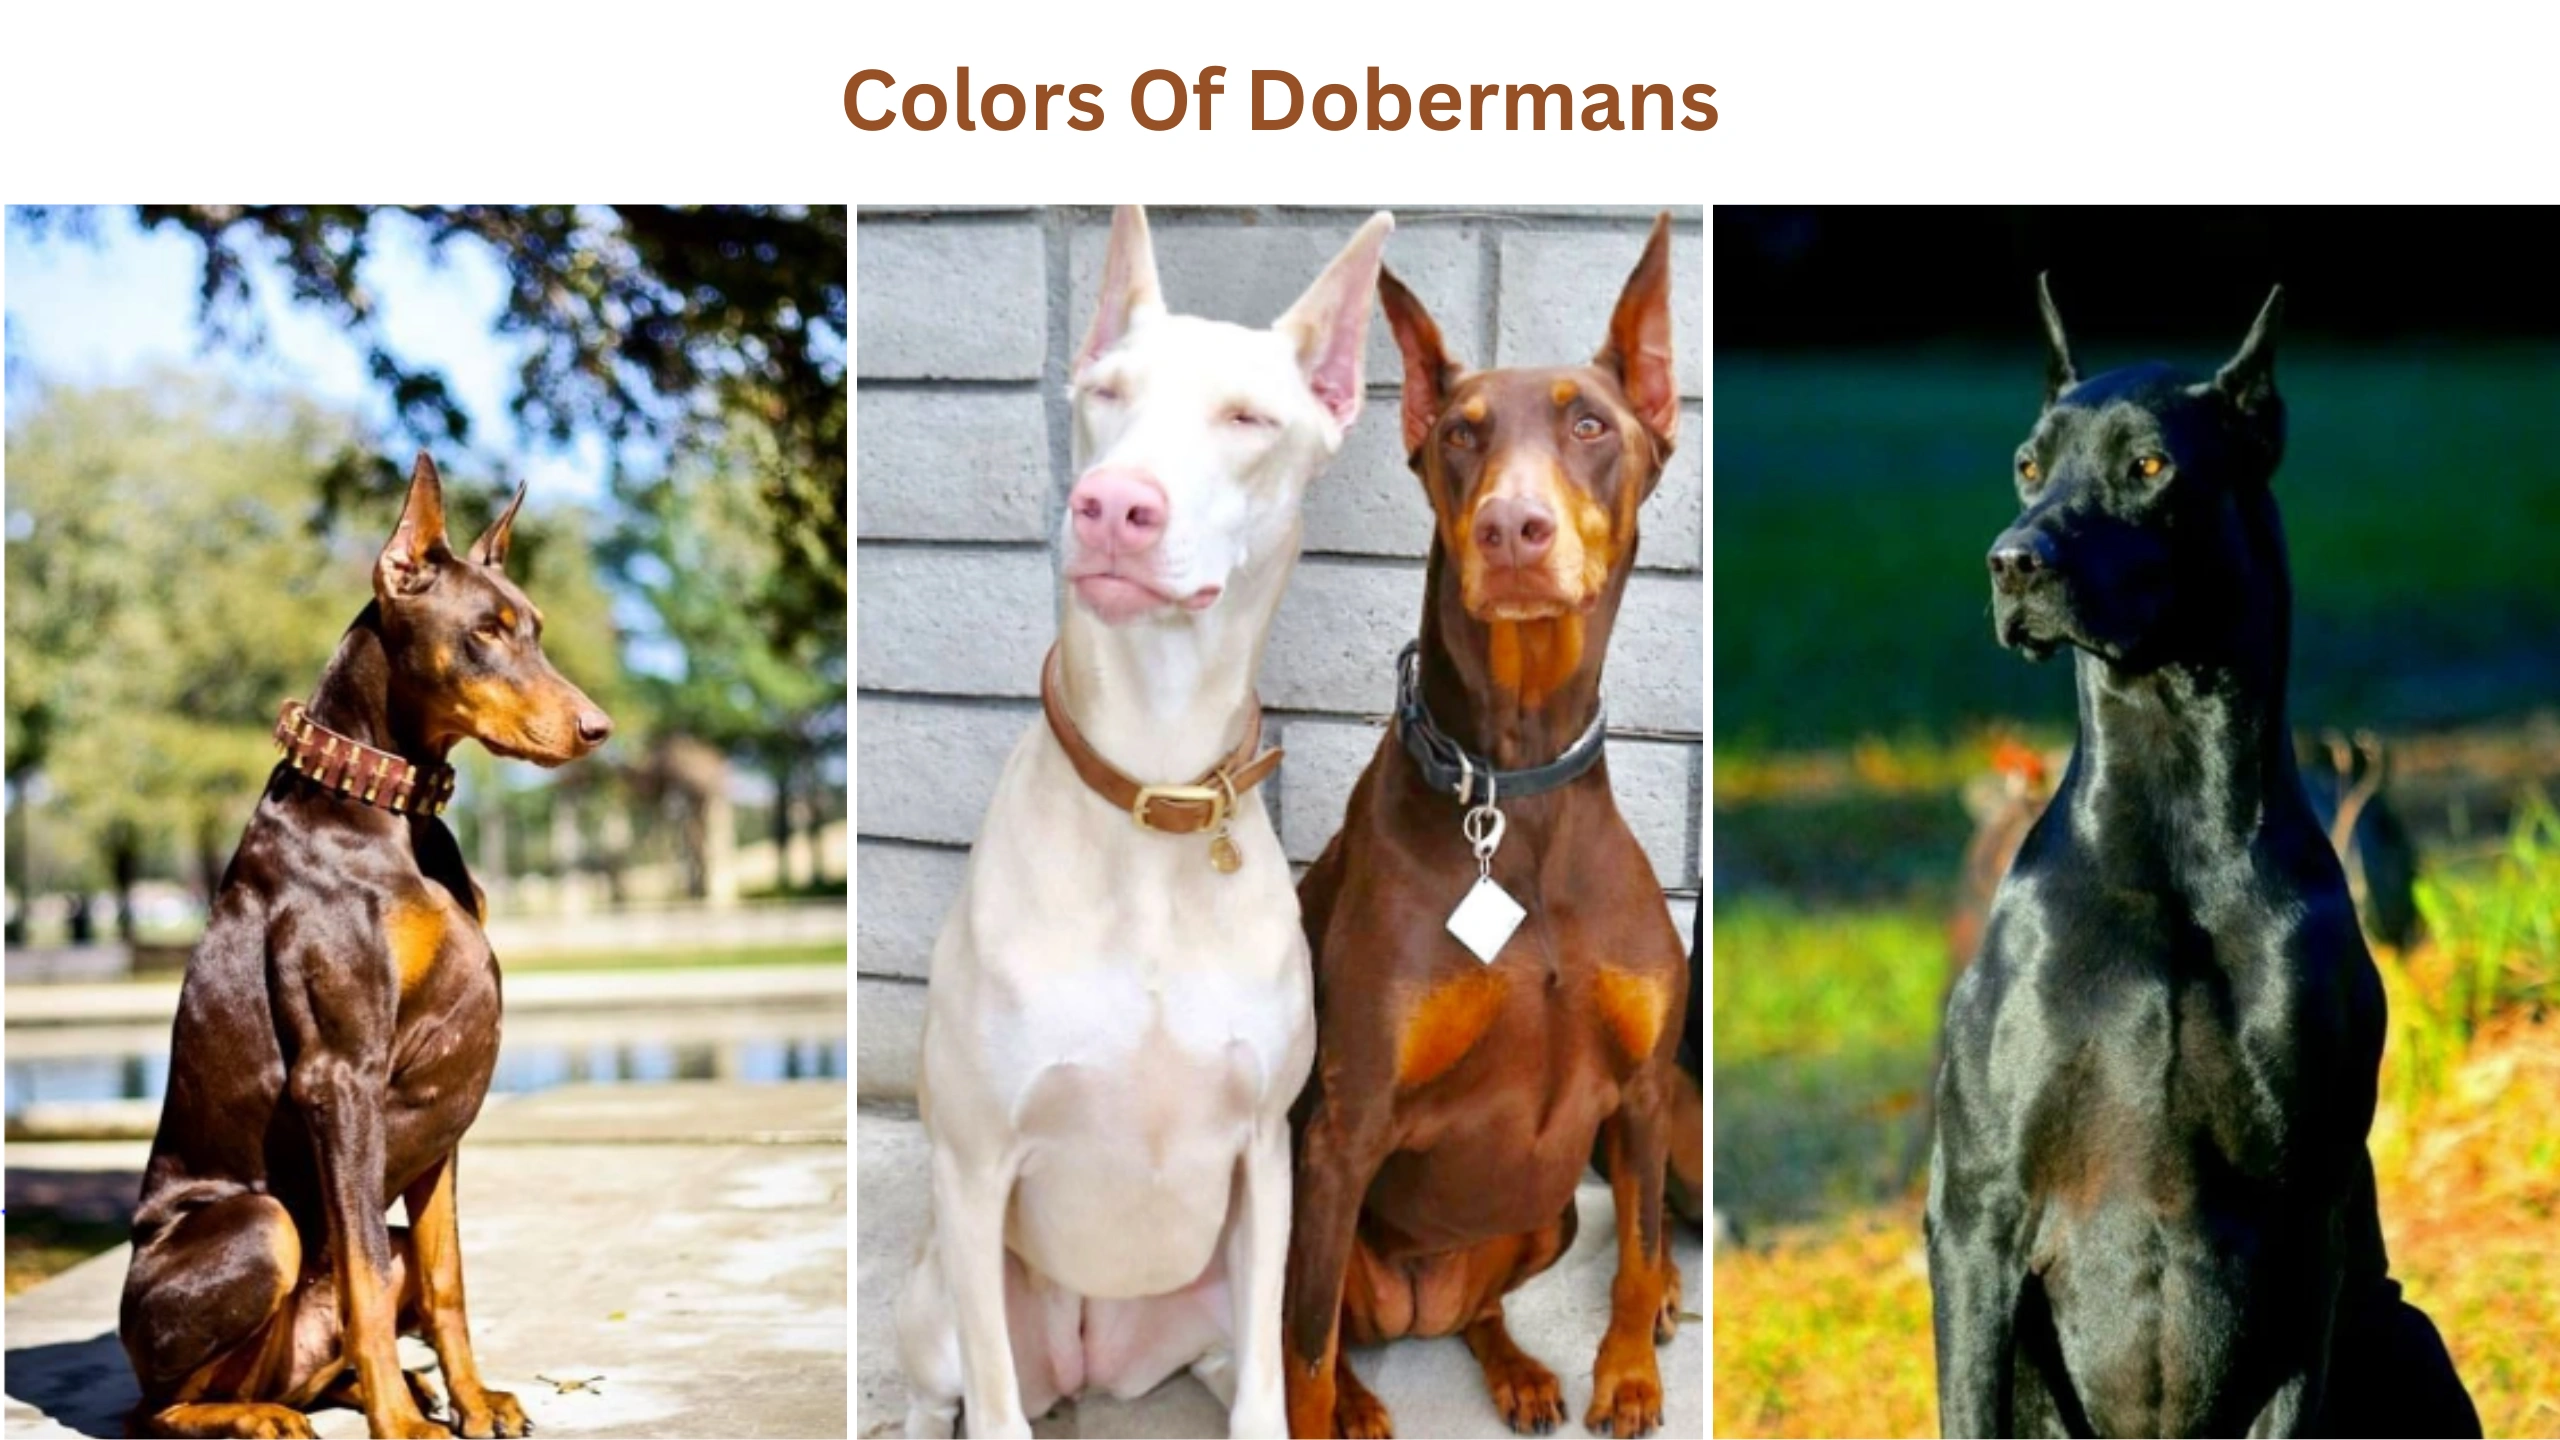 Colors of Dobermans